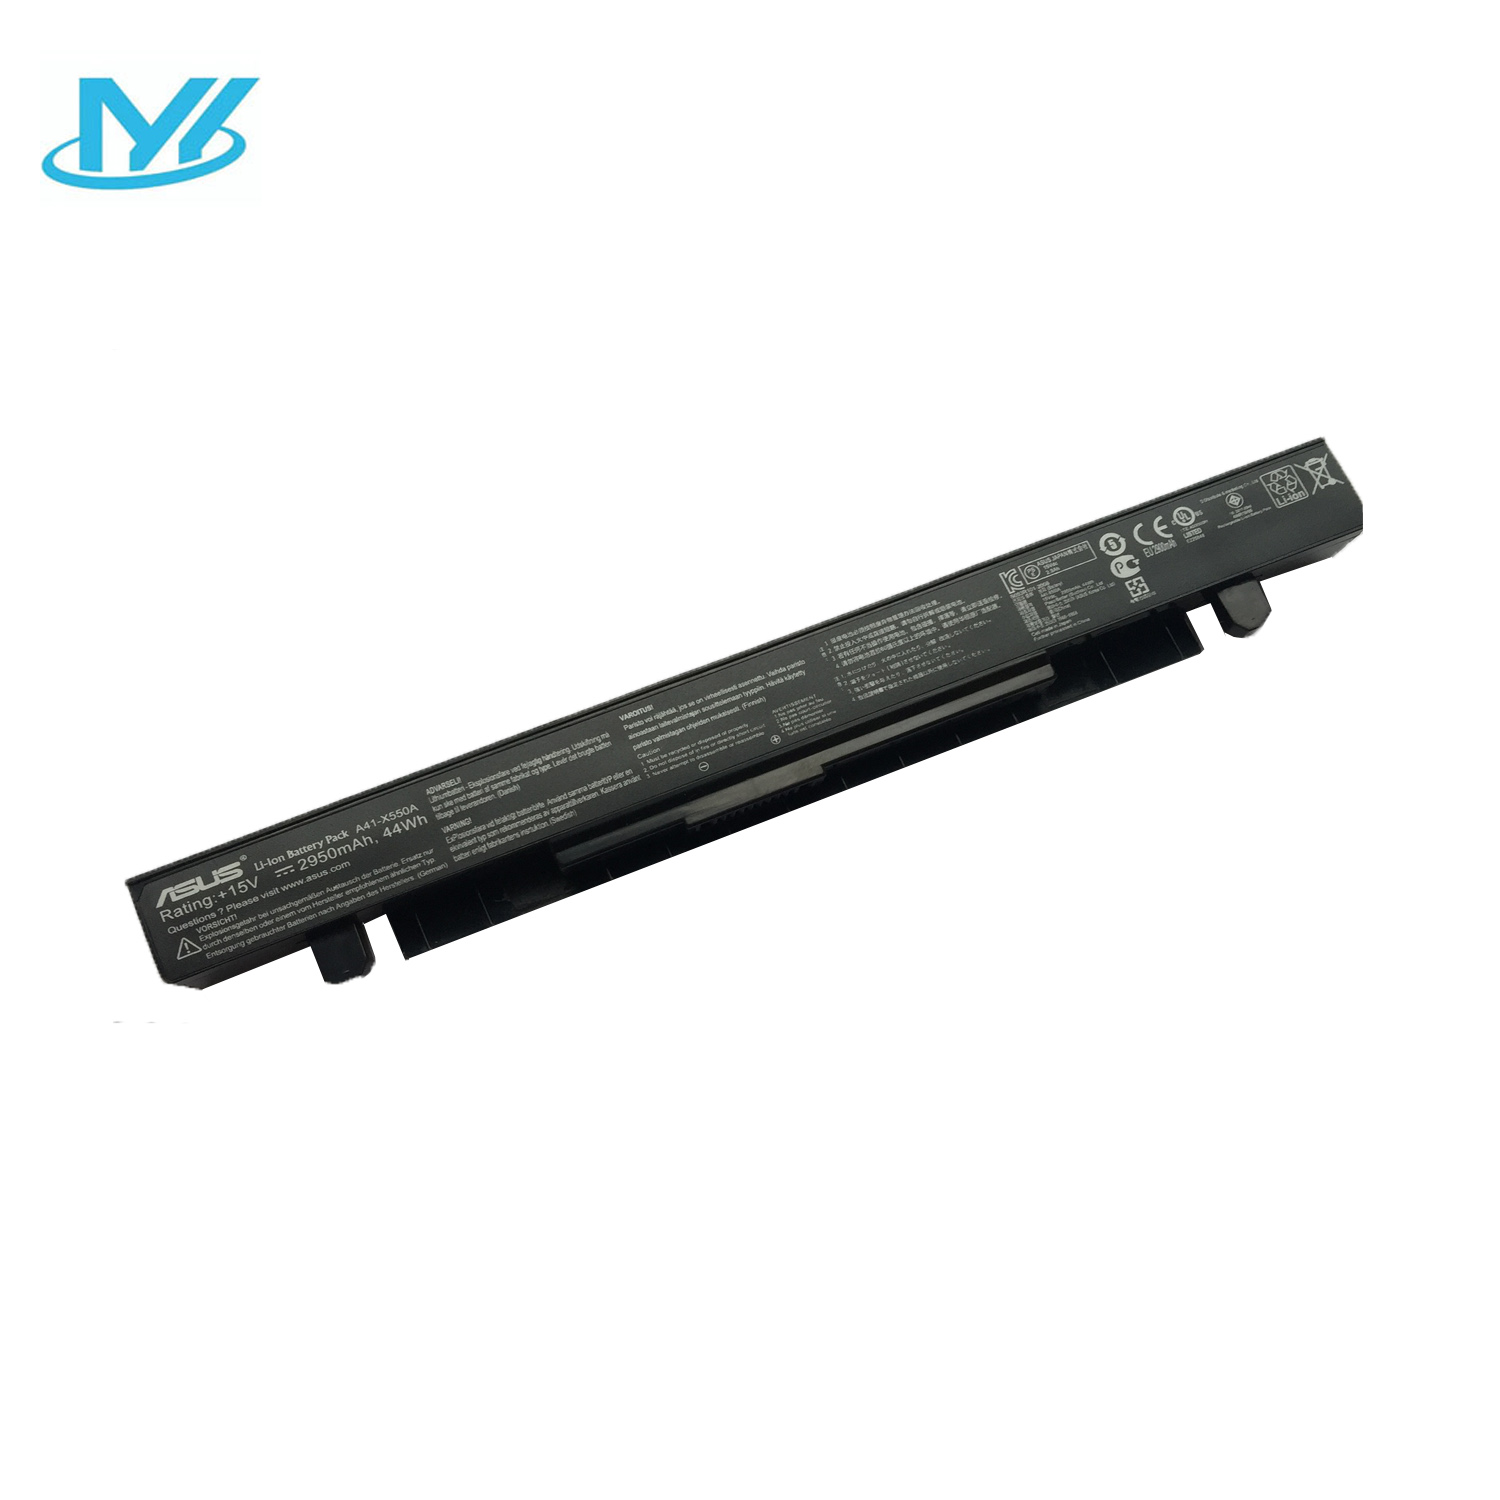 A41-XX50A li-ion laptop battery OEM Manufacturer for Asus X450 X550 A450 F450 F550 F552 K450 K550 P450 P550 R409 R510